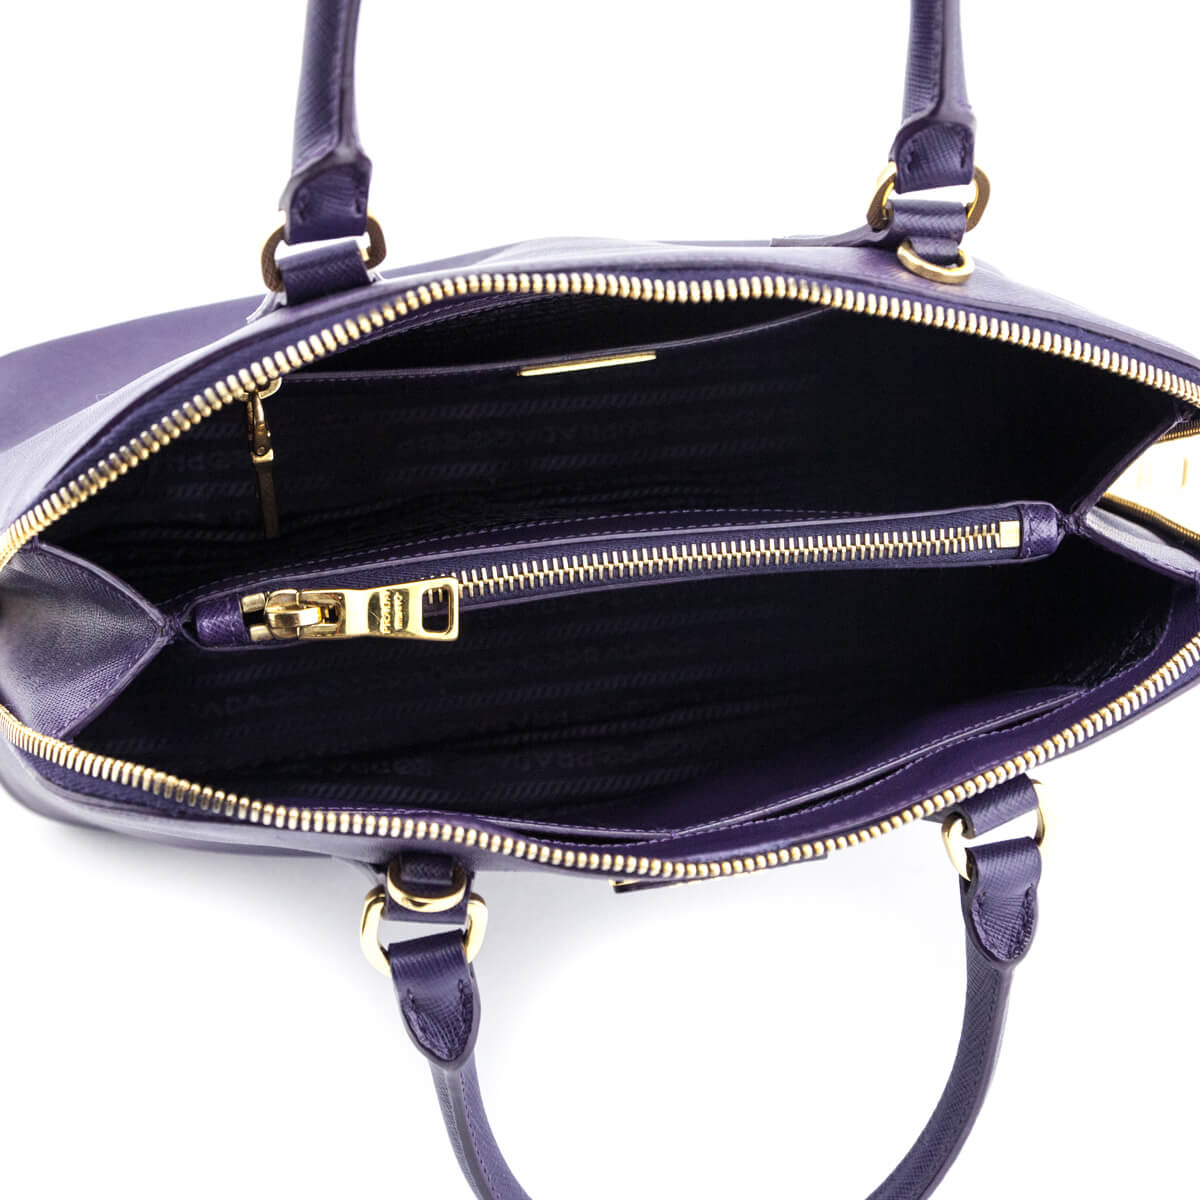 Prada Saffiano Bag Reference Guide - Spotted Fashion